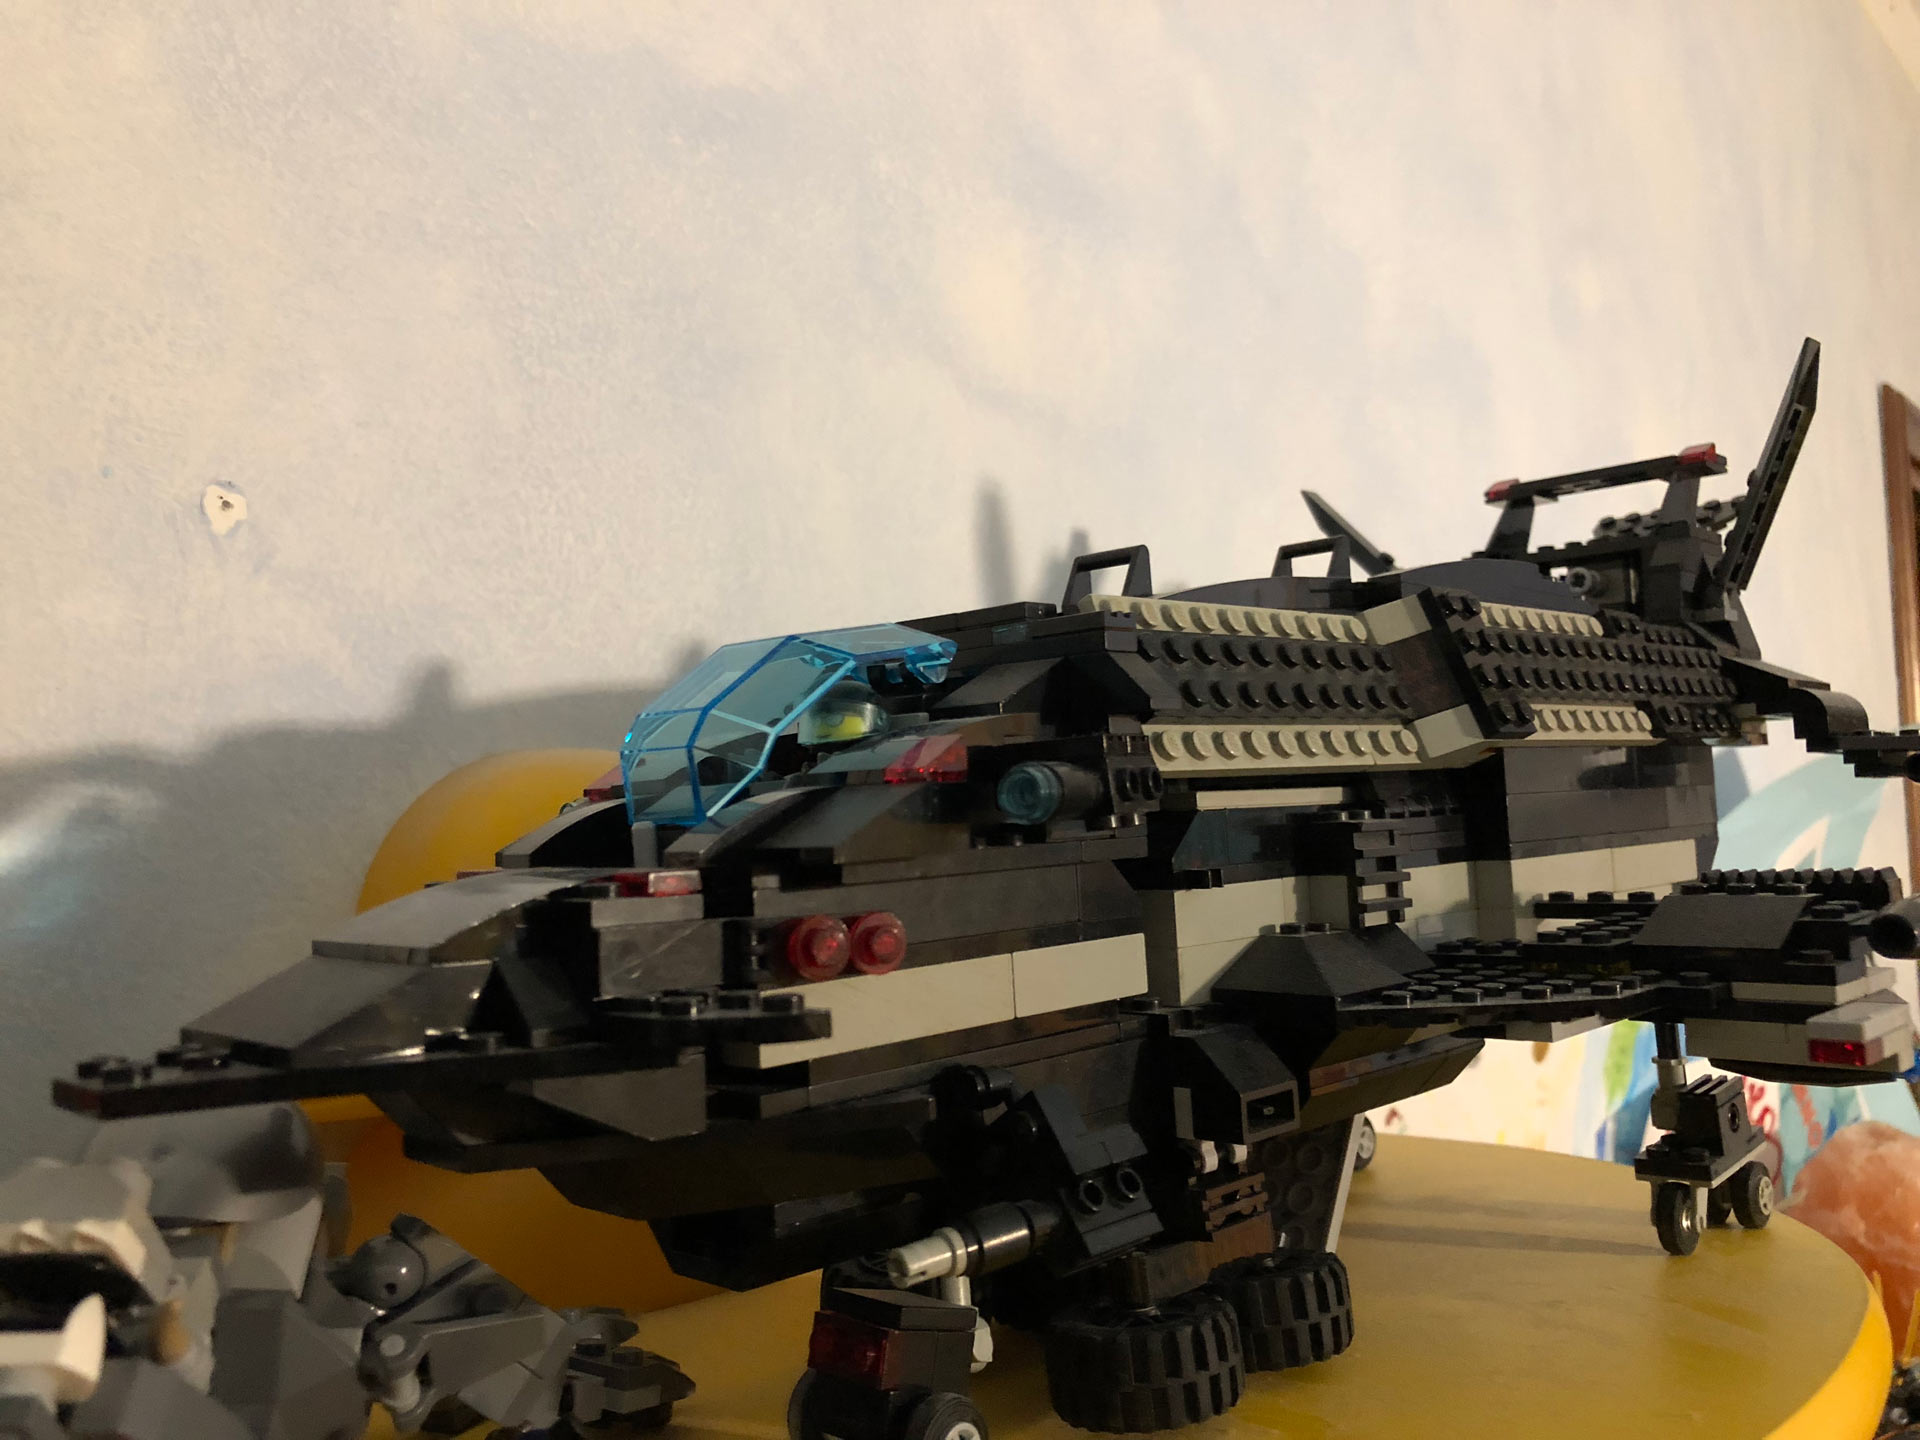 Lego Invention F16 Interceptor